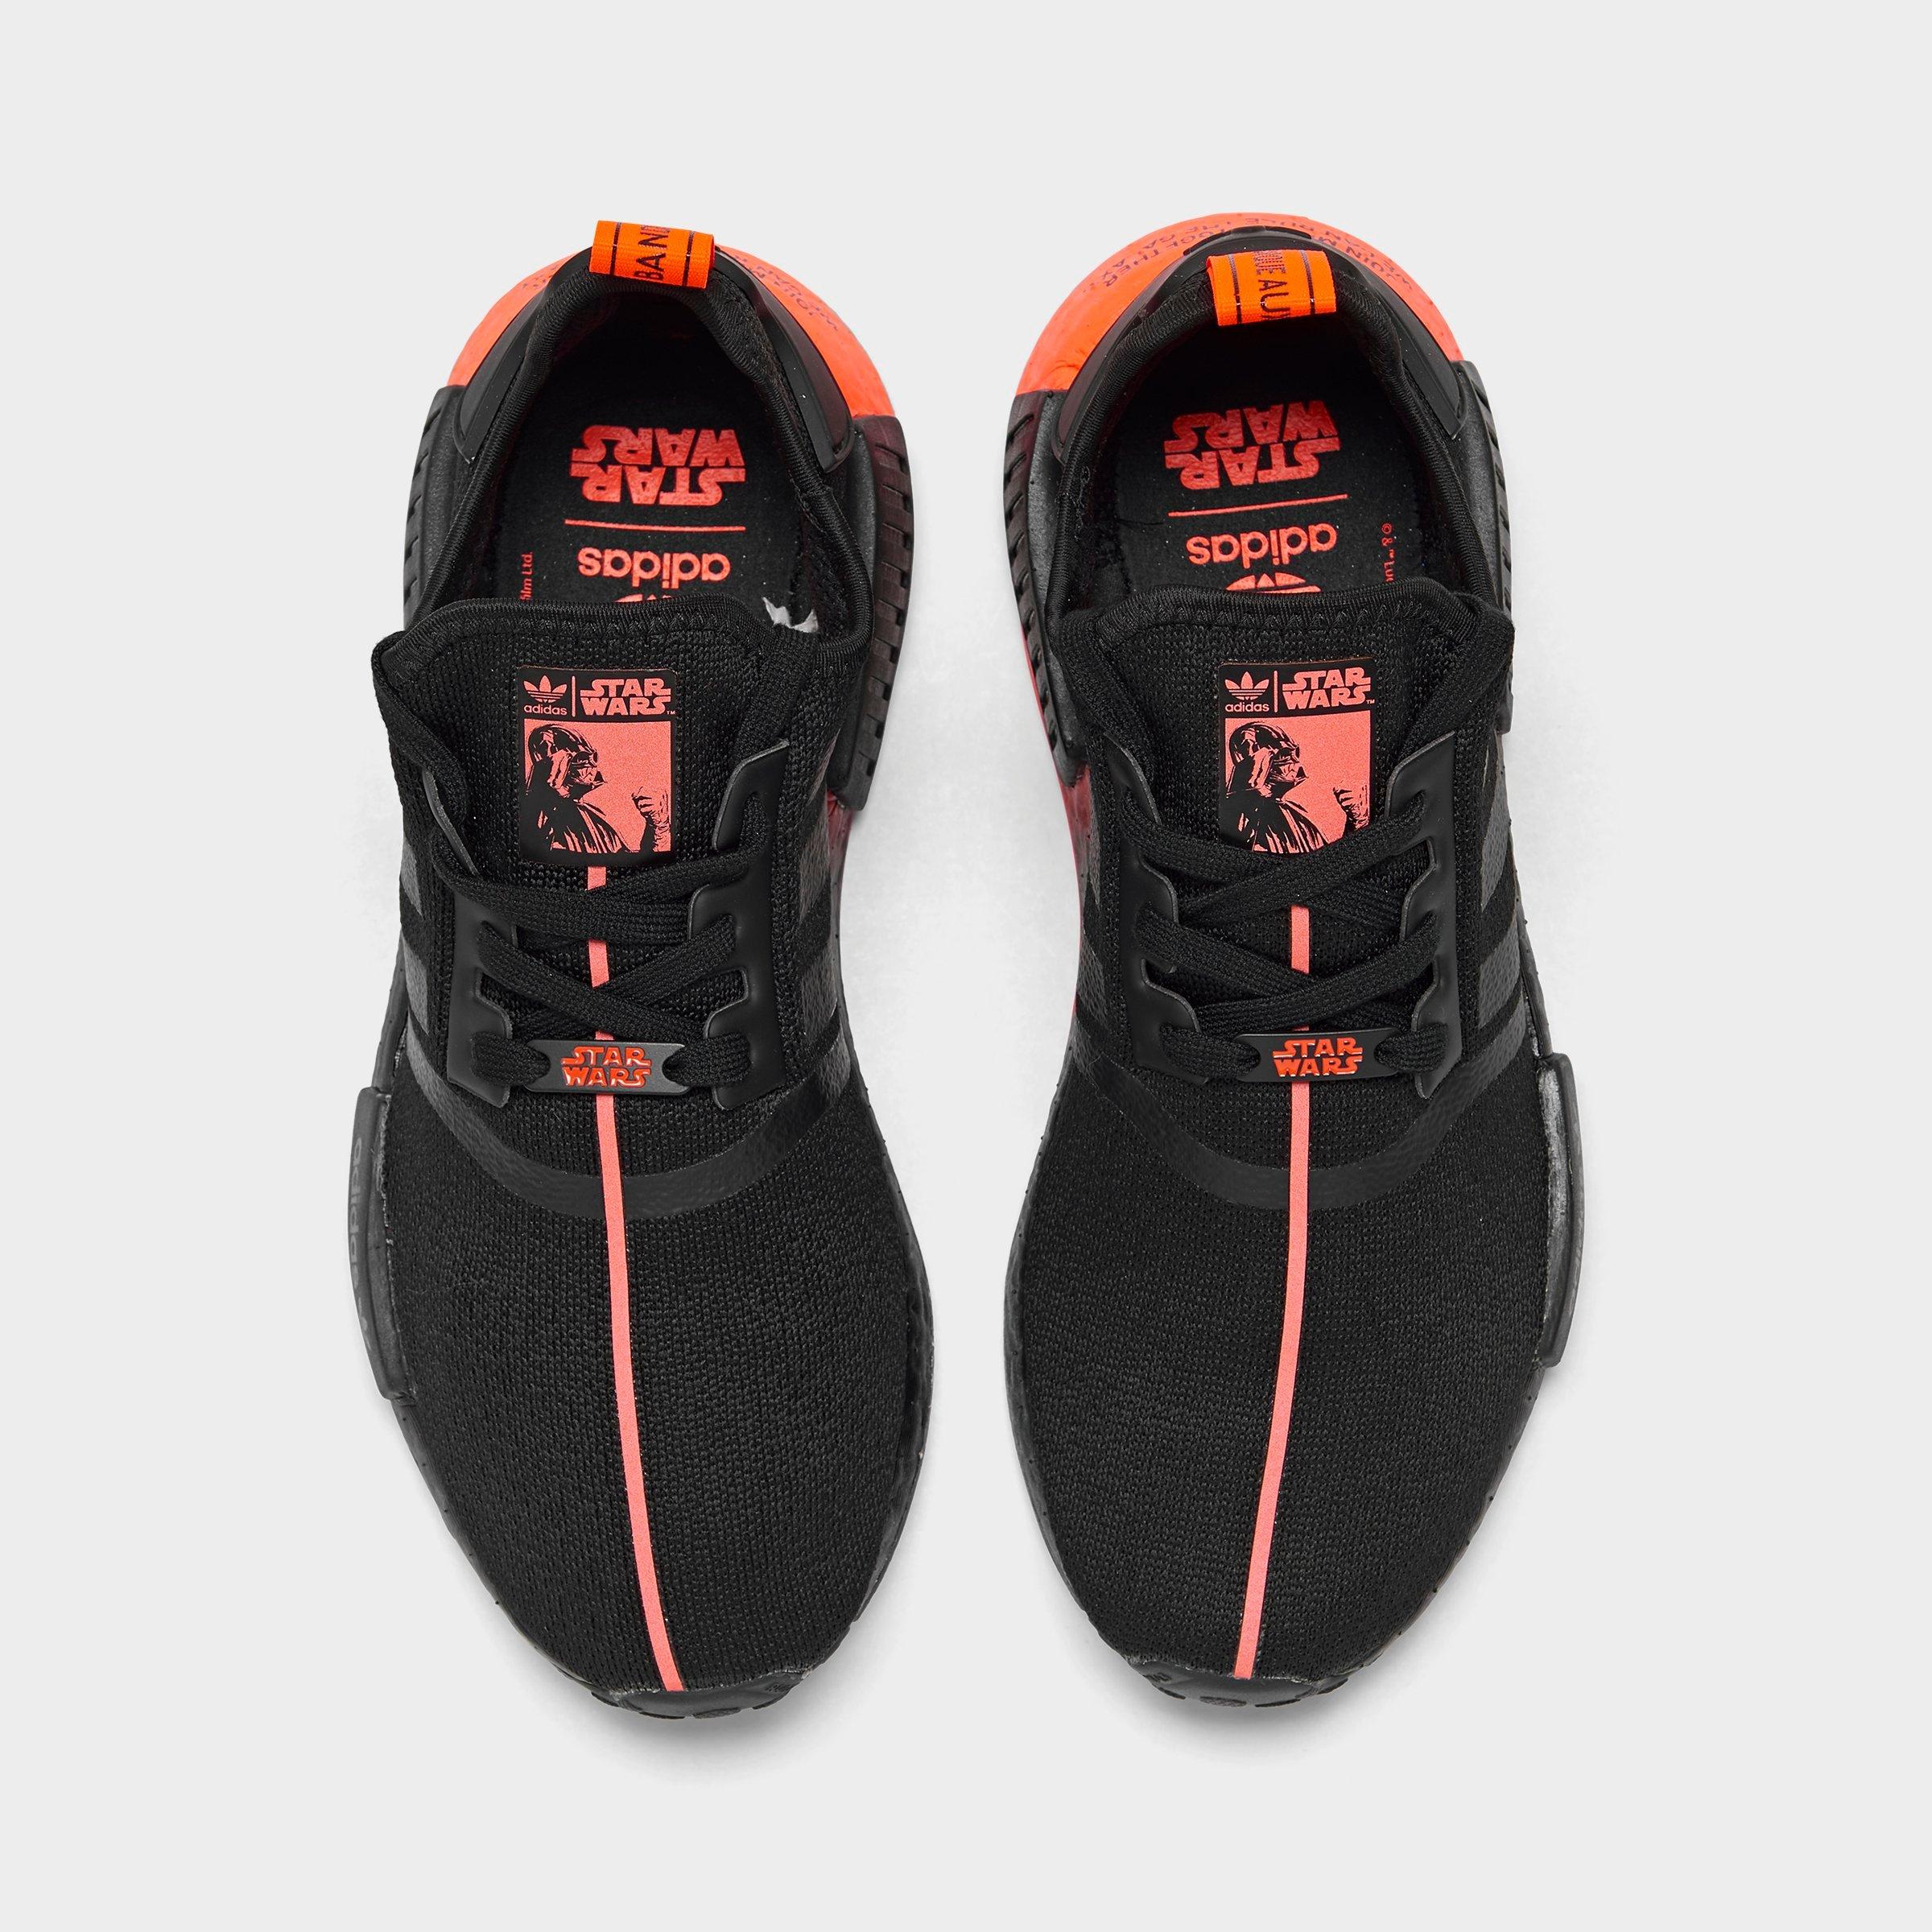 Adidas nmd r1 db3586 black shoes pink sneakers eBay